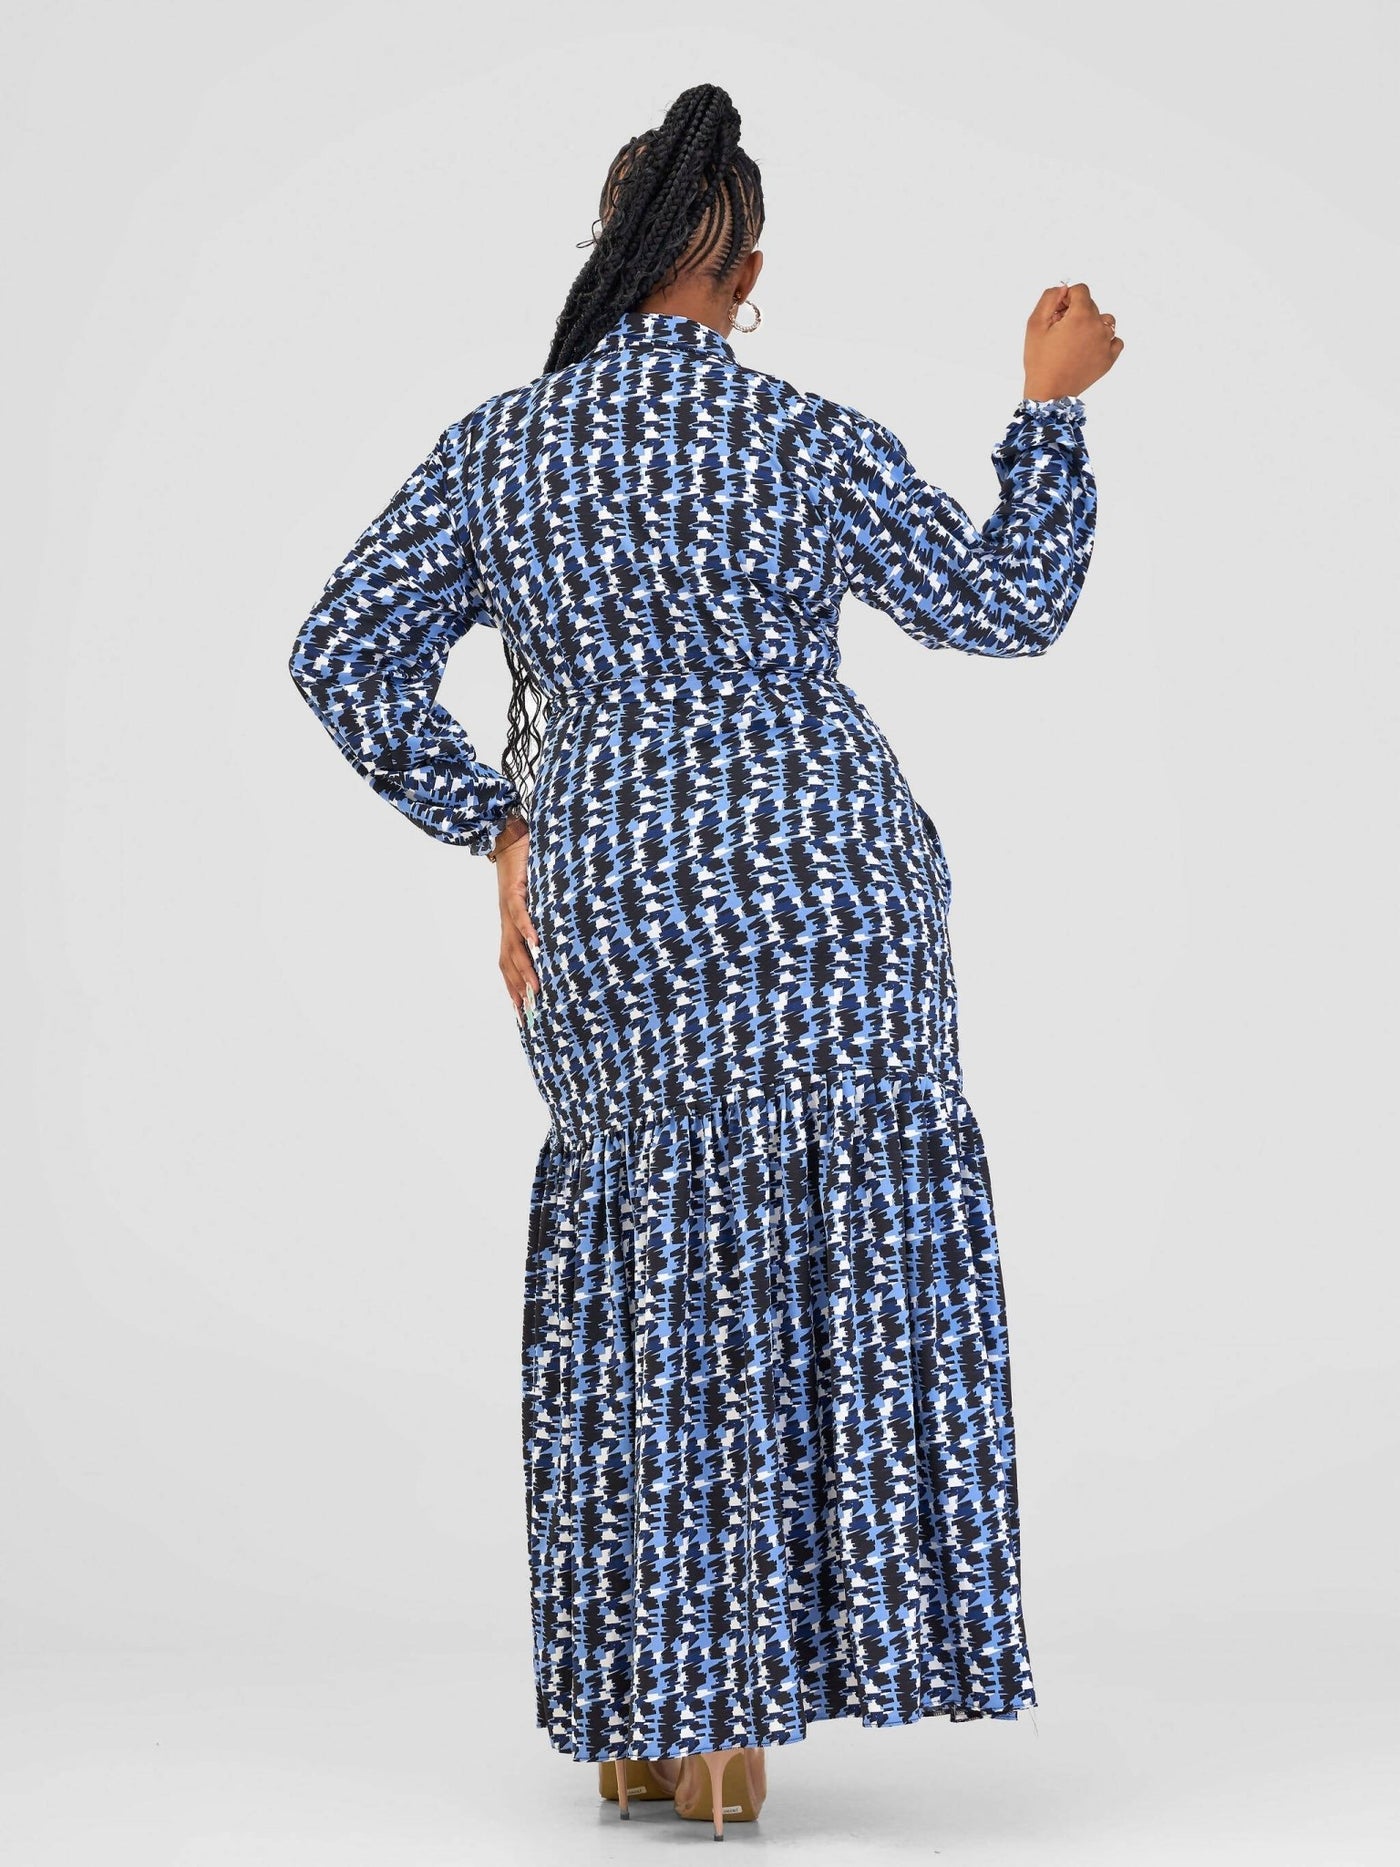 Phyls Collections Atieno Dress - Blue Print - Shopzetu